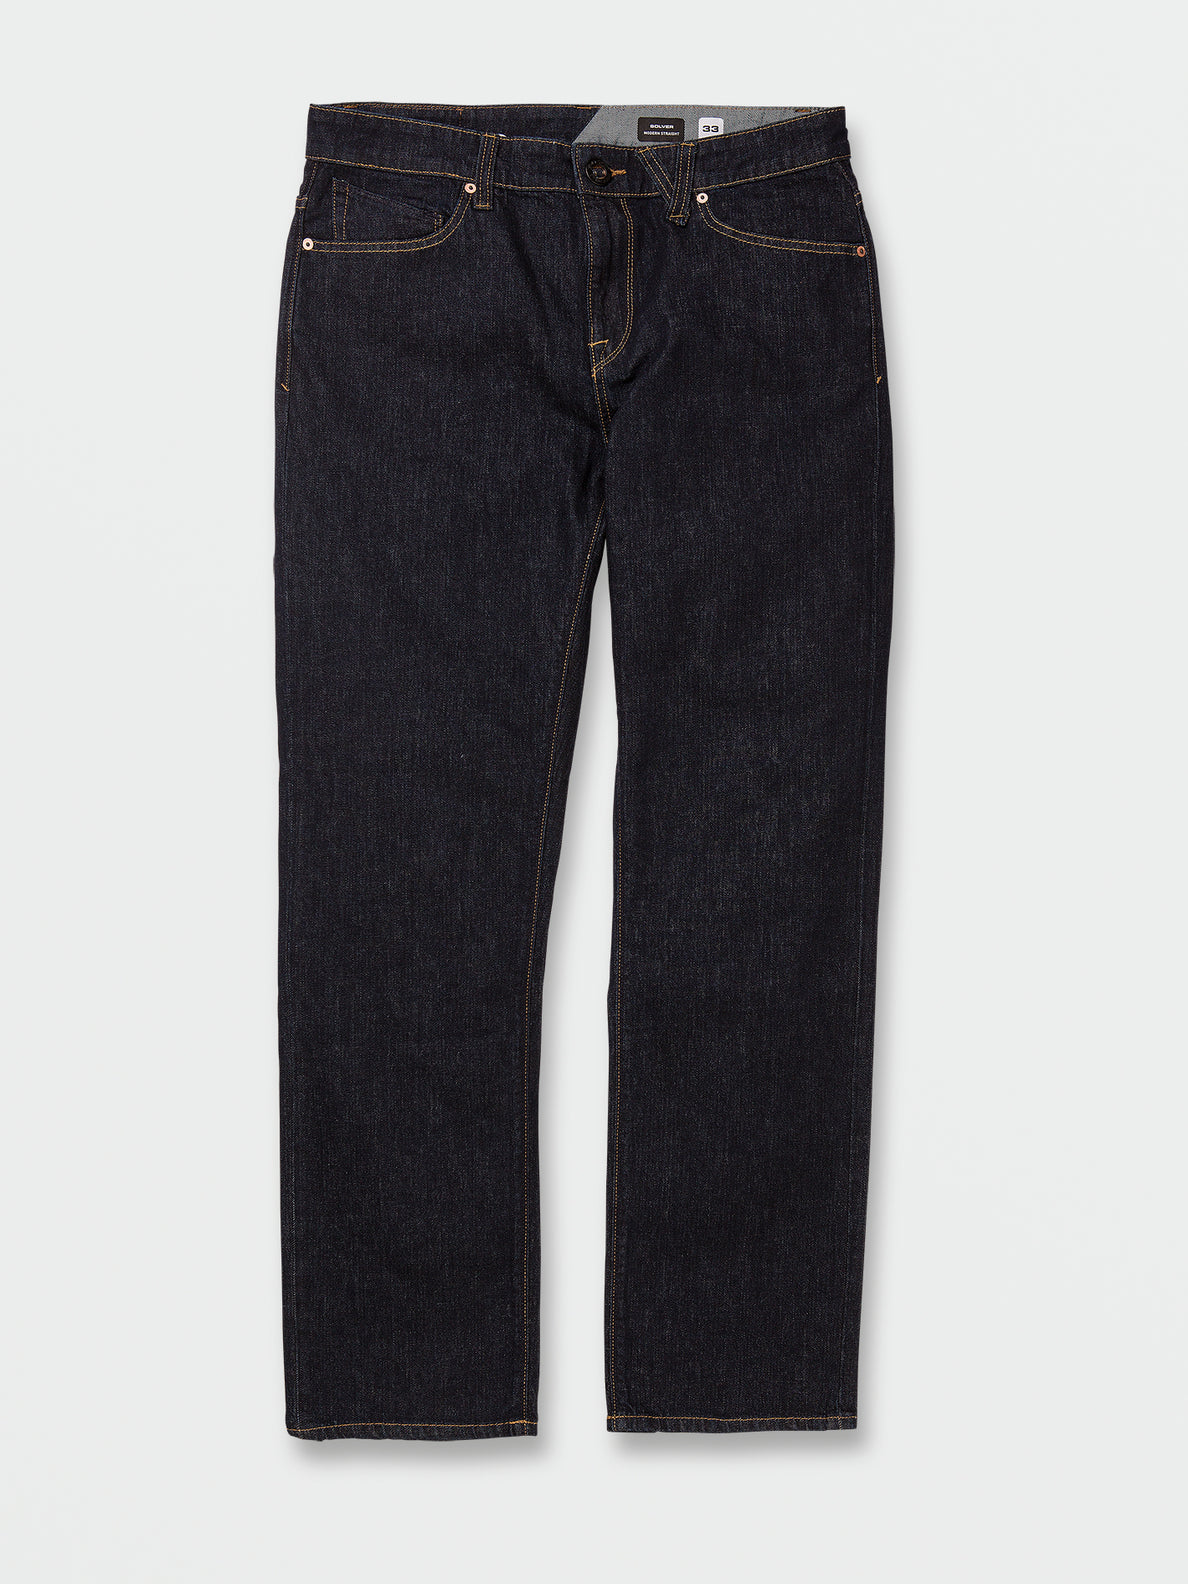 V Solver Modern Fit Stretch Jeans - Rinsed Indigo